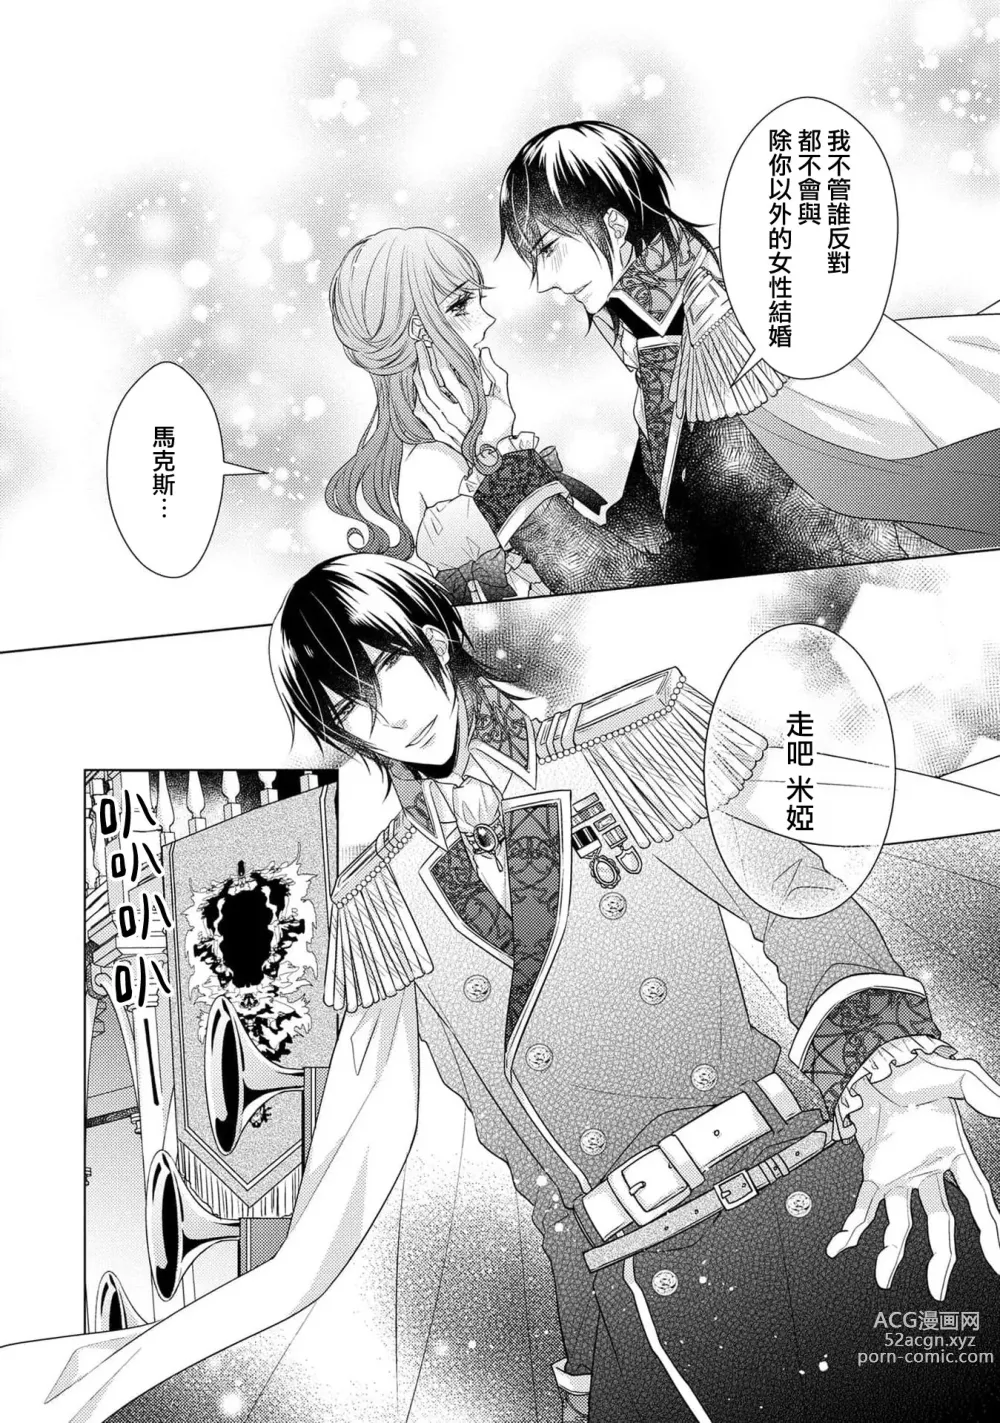 Page 156 of manga 宠爱王子和处女少女~30岁还是处女，这一次和真壁社长签订了炮友契约~ 1-5 end